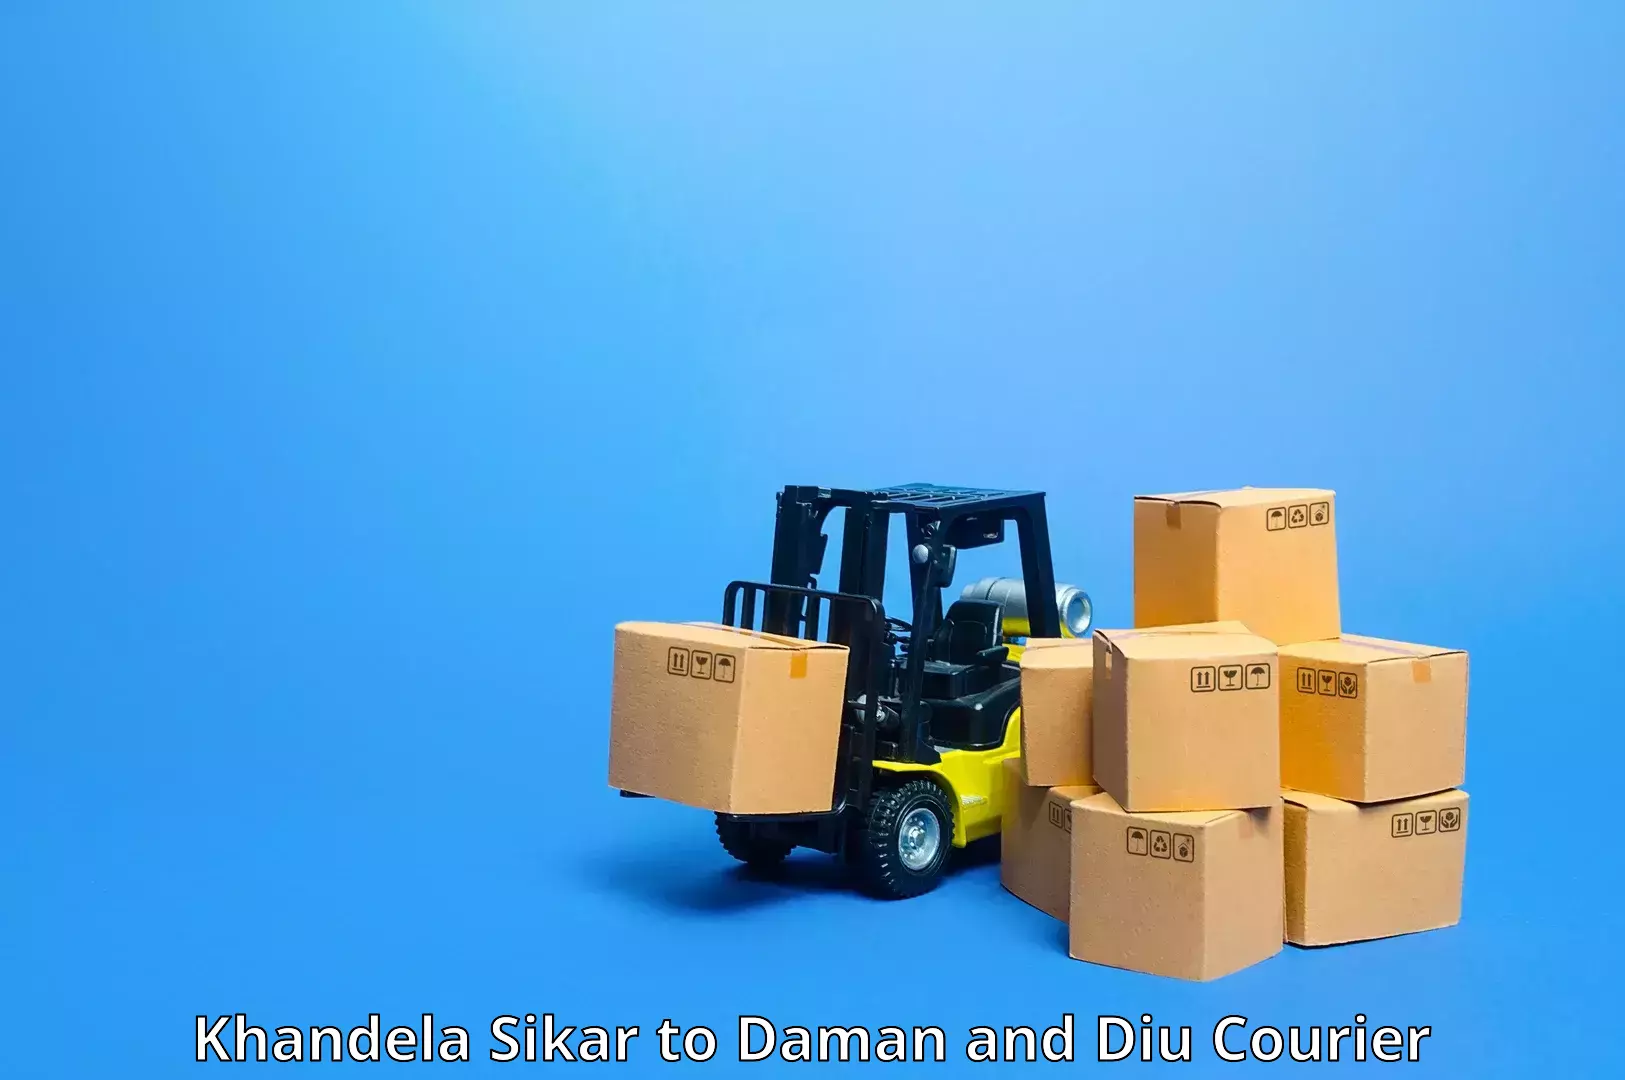 Express delivery capabilities Khandela Sikar to Diu